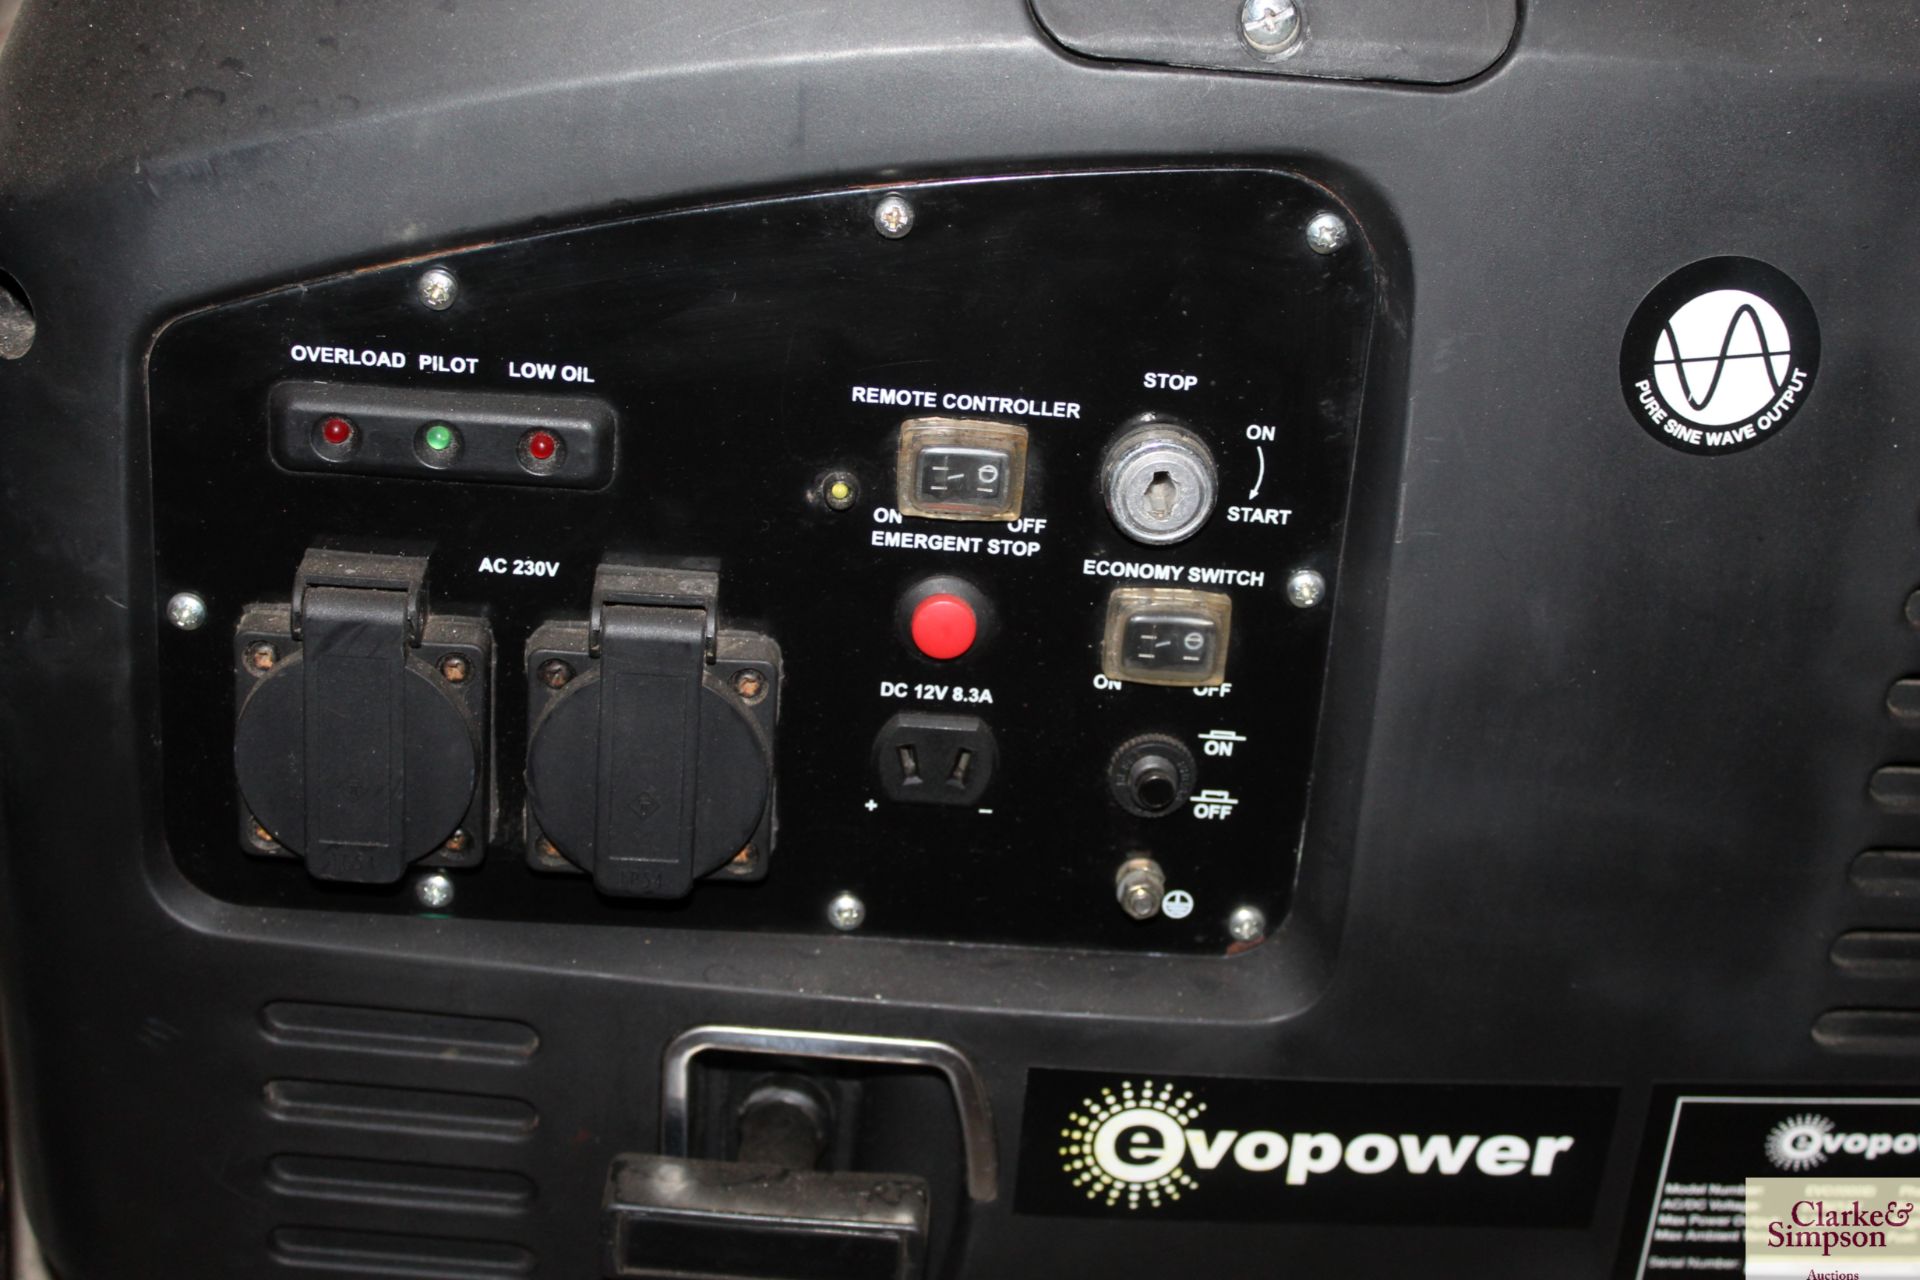 EuroPower portable generator. - Image 3 of 4